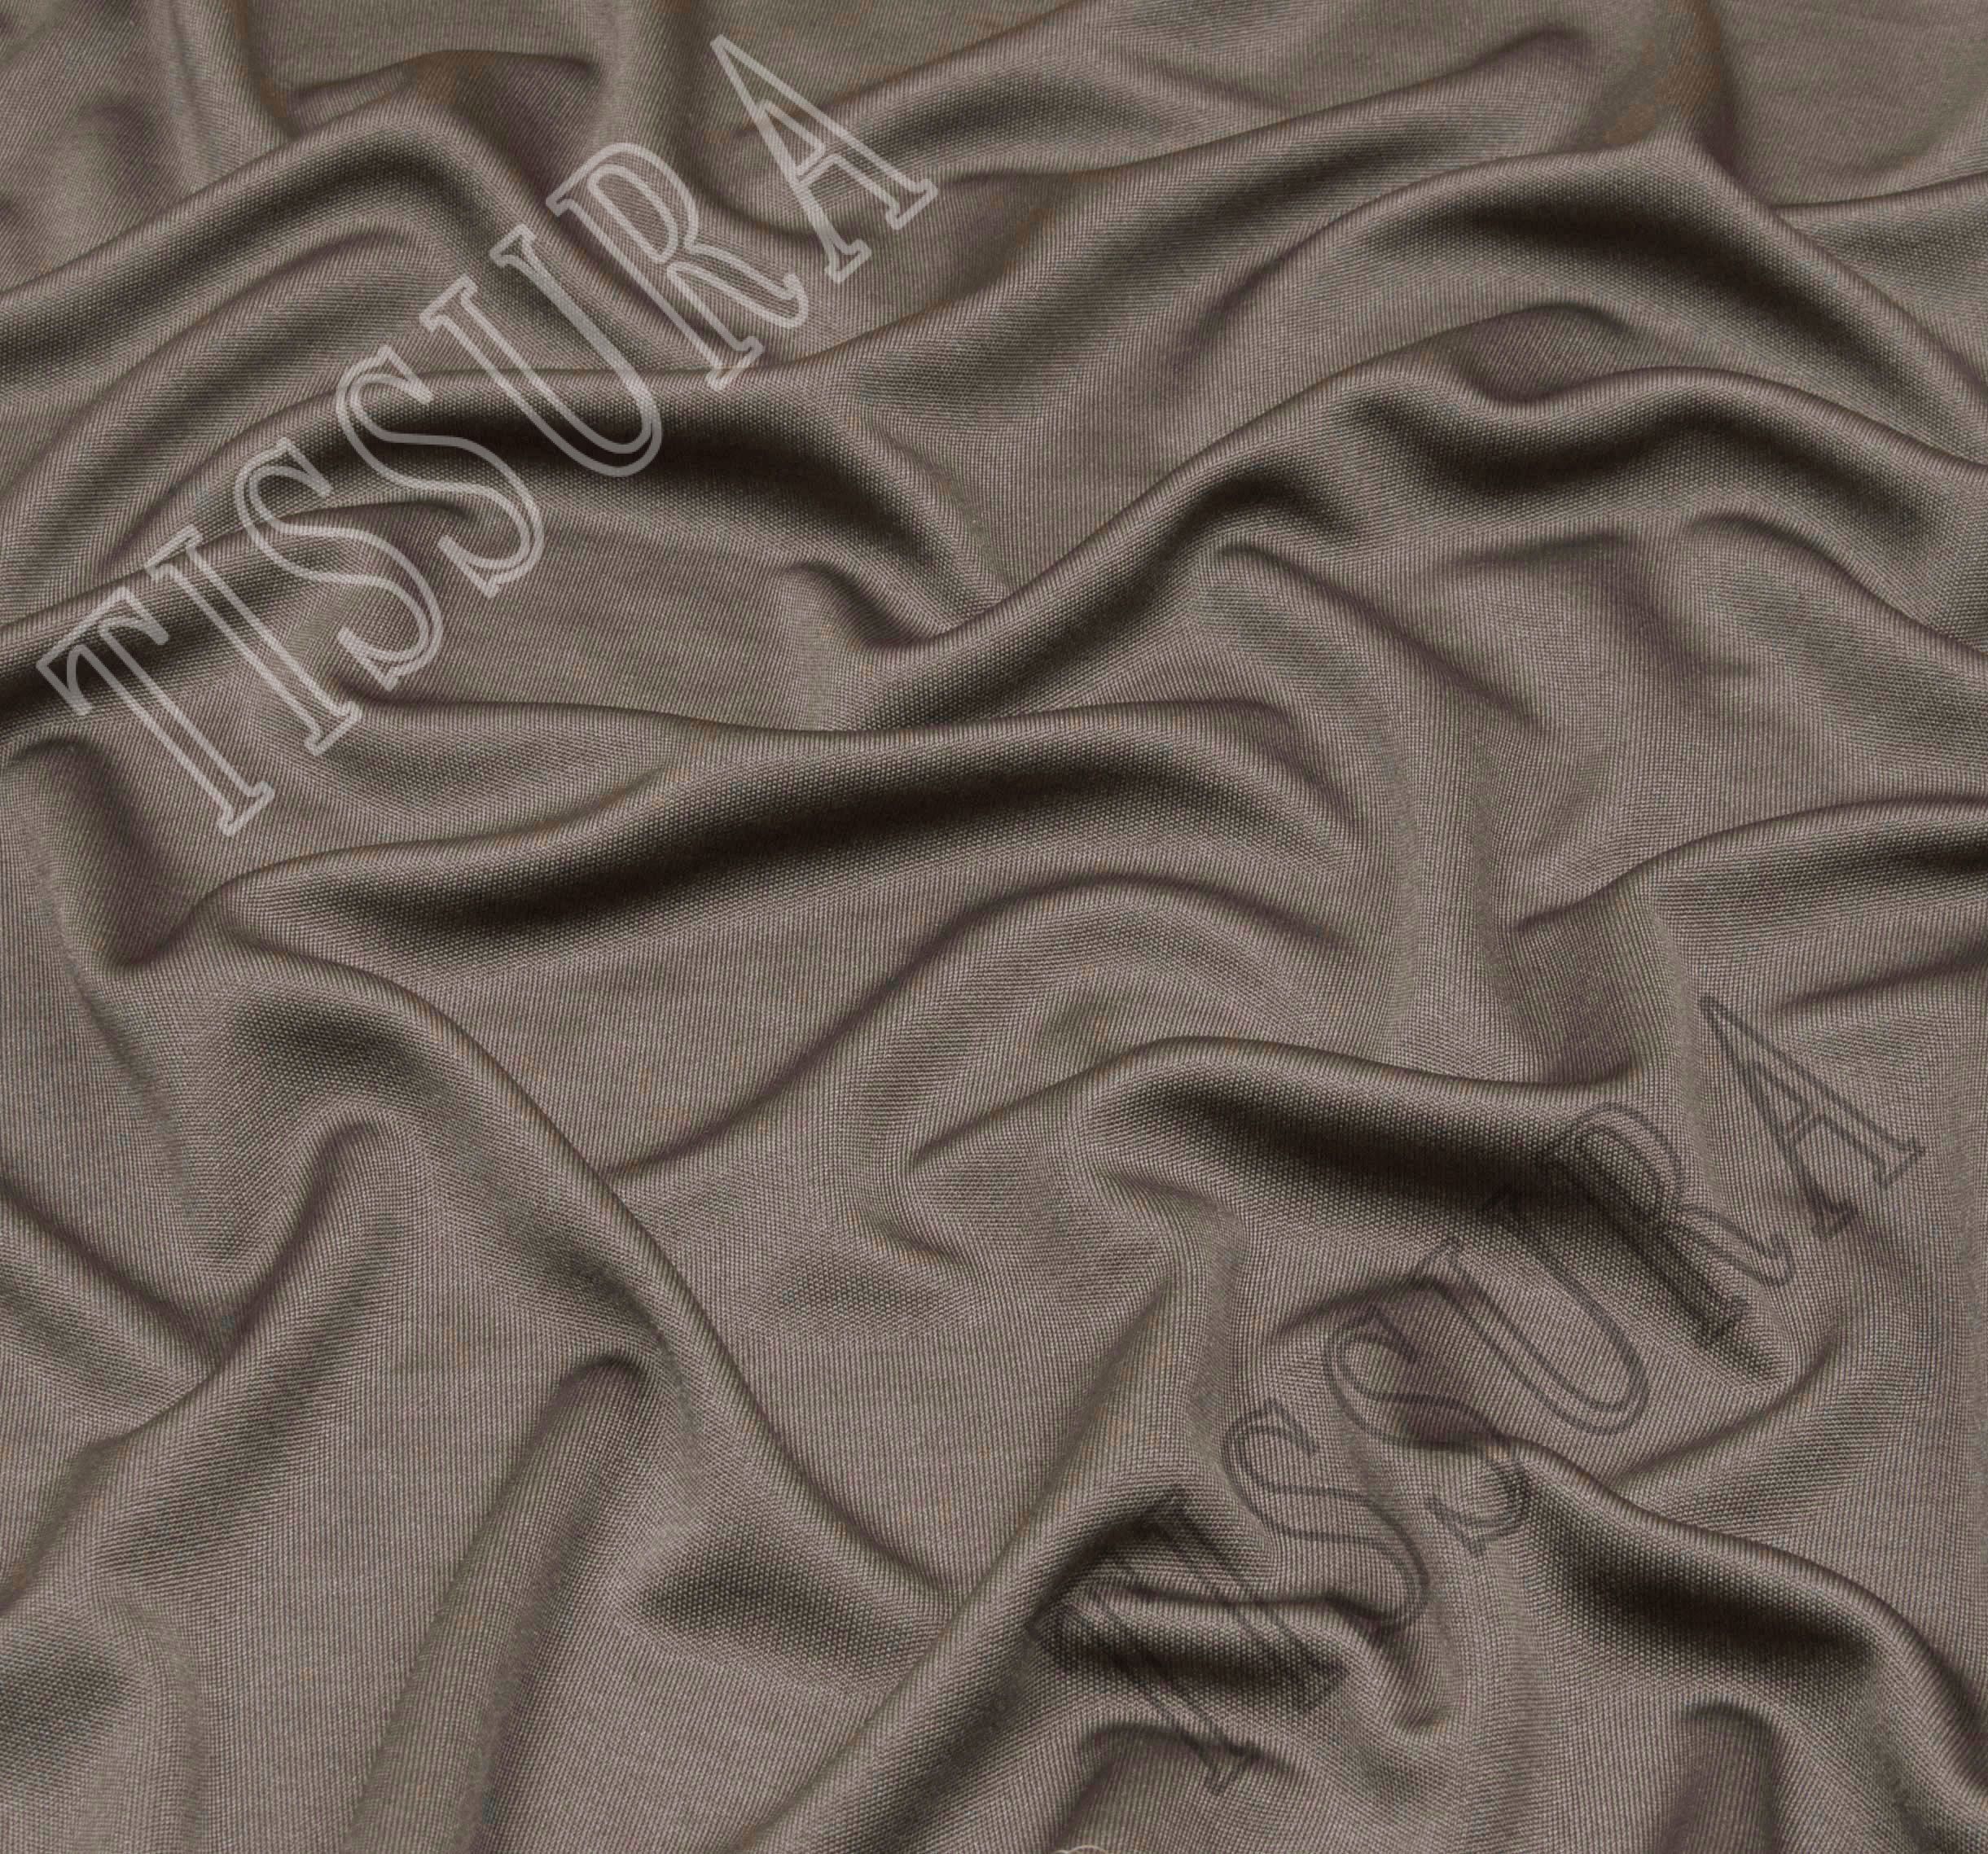 Kirken Marine Indkøbscenter Silk Jersey Knit Fabric: 100% Silk Fabrics from France by Guigou, SKU  00050752 at $216 — Buy Silk Fabrics Online